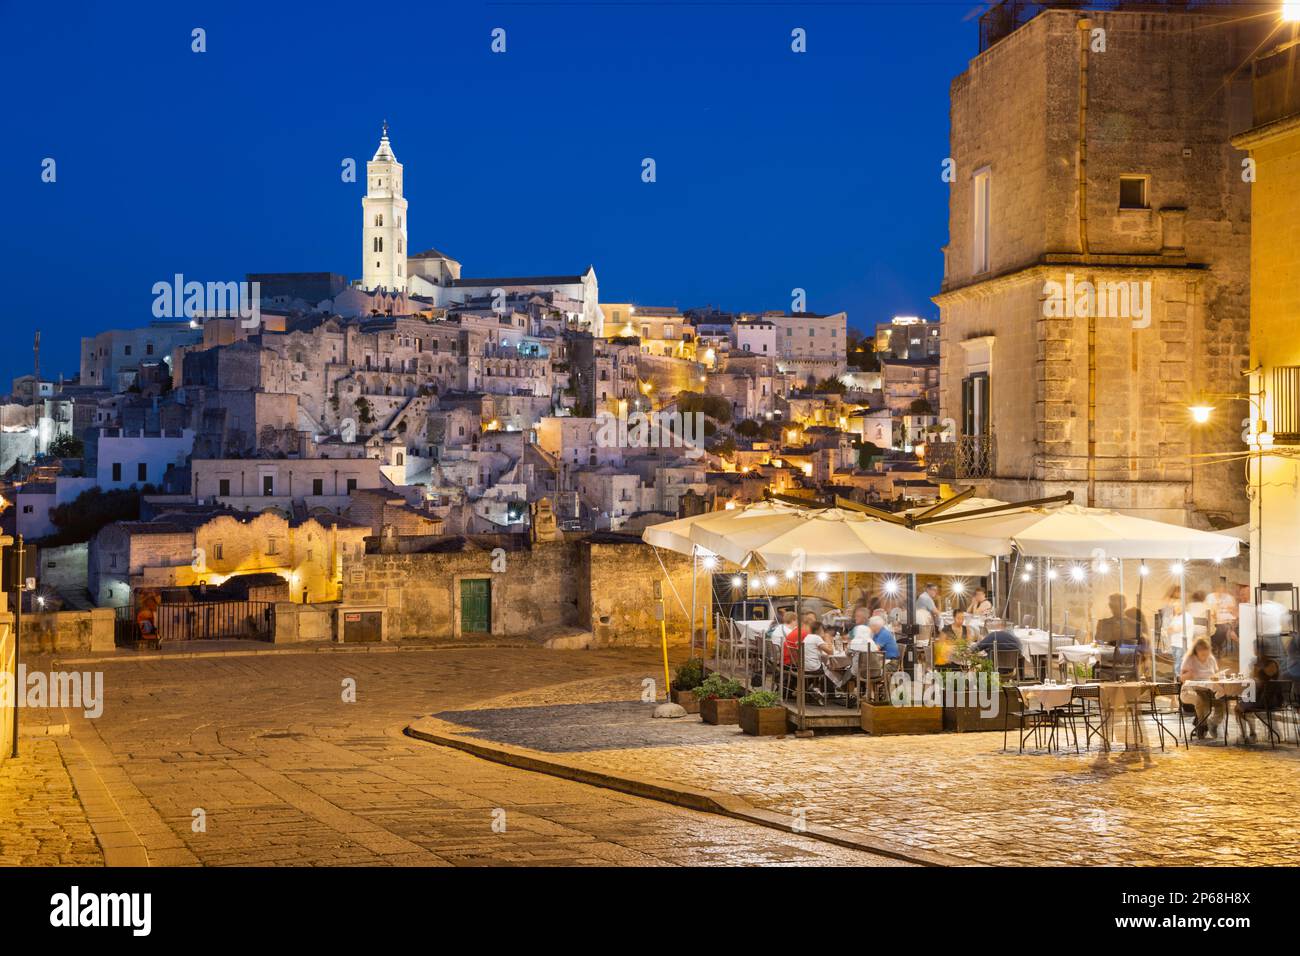 Restaurant at night with the Sassi di Matera old town floodlit, UNESCO World Heritage Site, Via D'Addozio, Matera, Basilicata, Italy, Europe Stock Photo